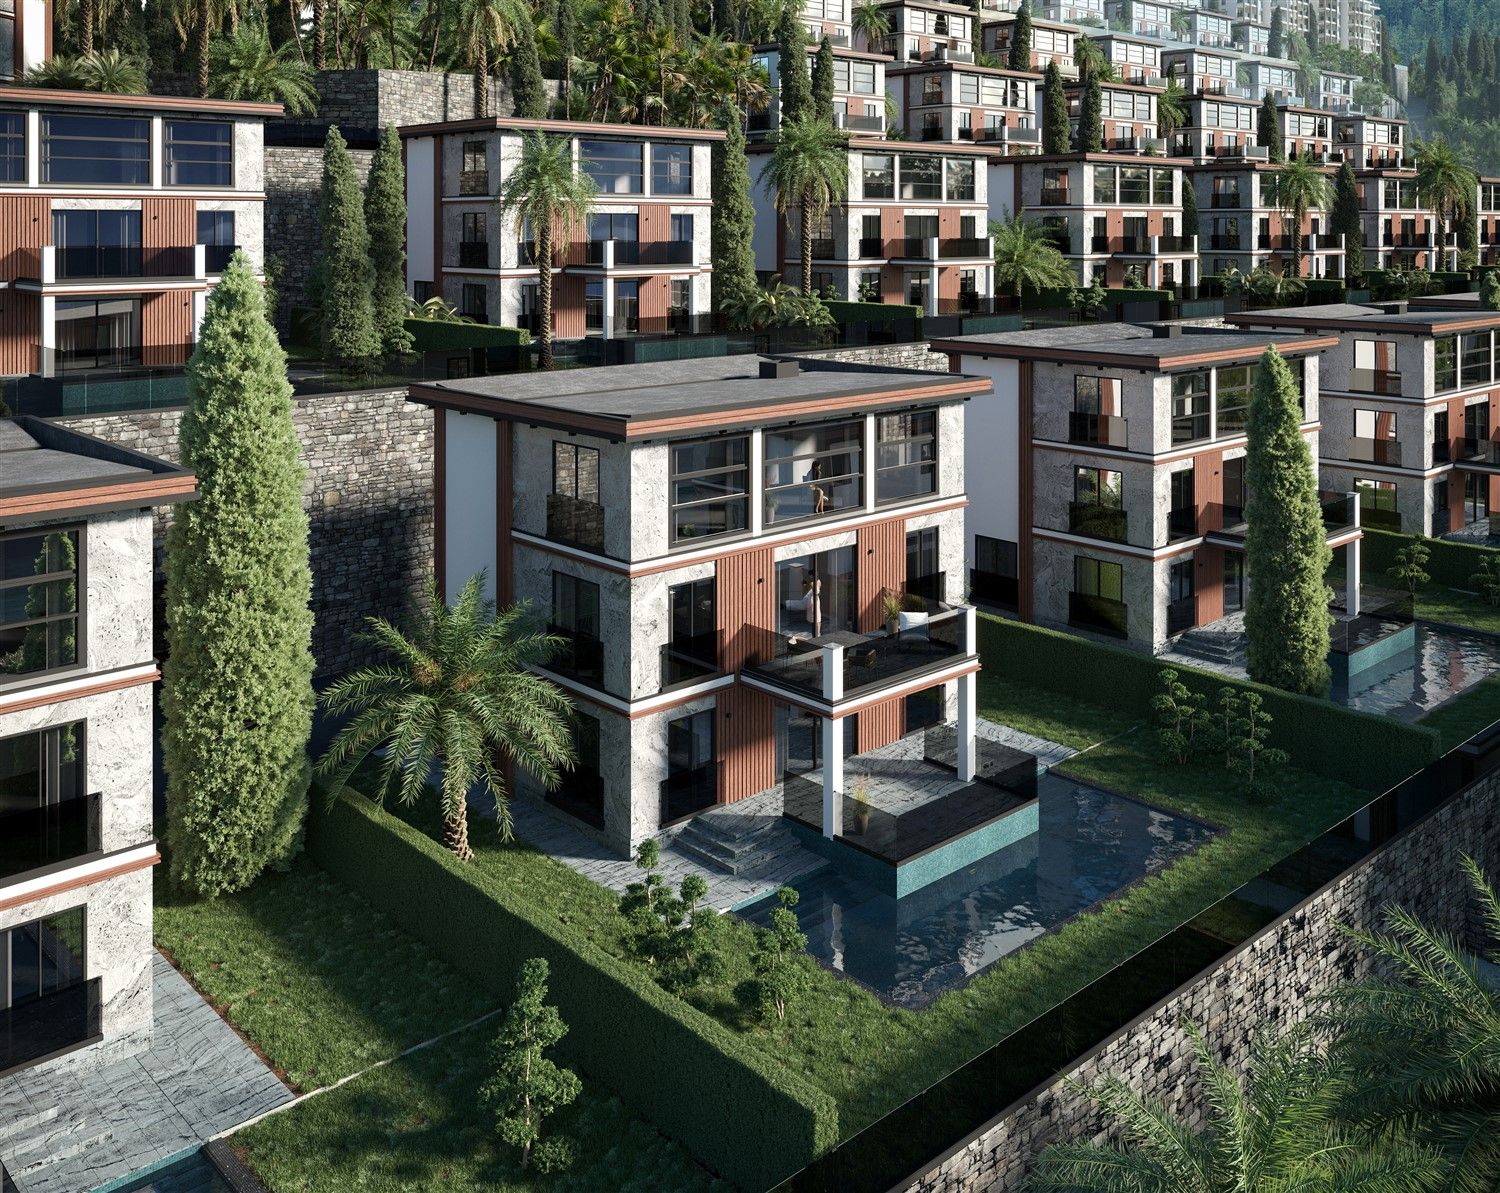 Premium complex of villas and apartments on the Alanya coast